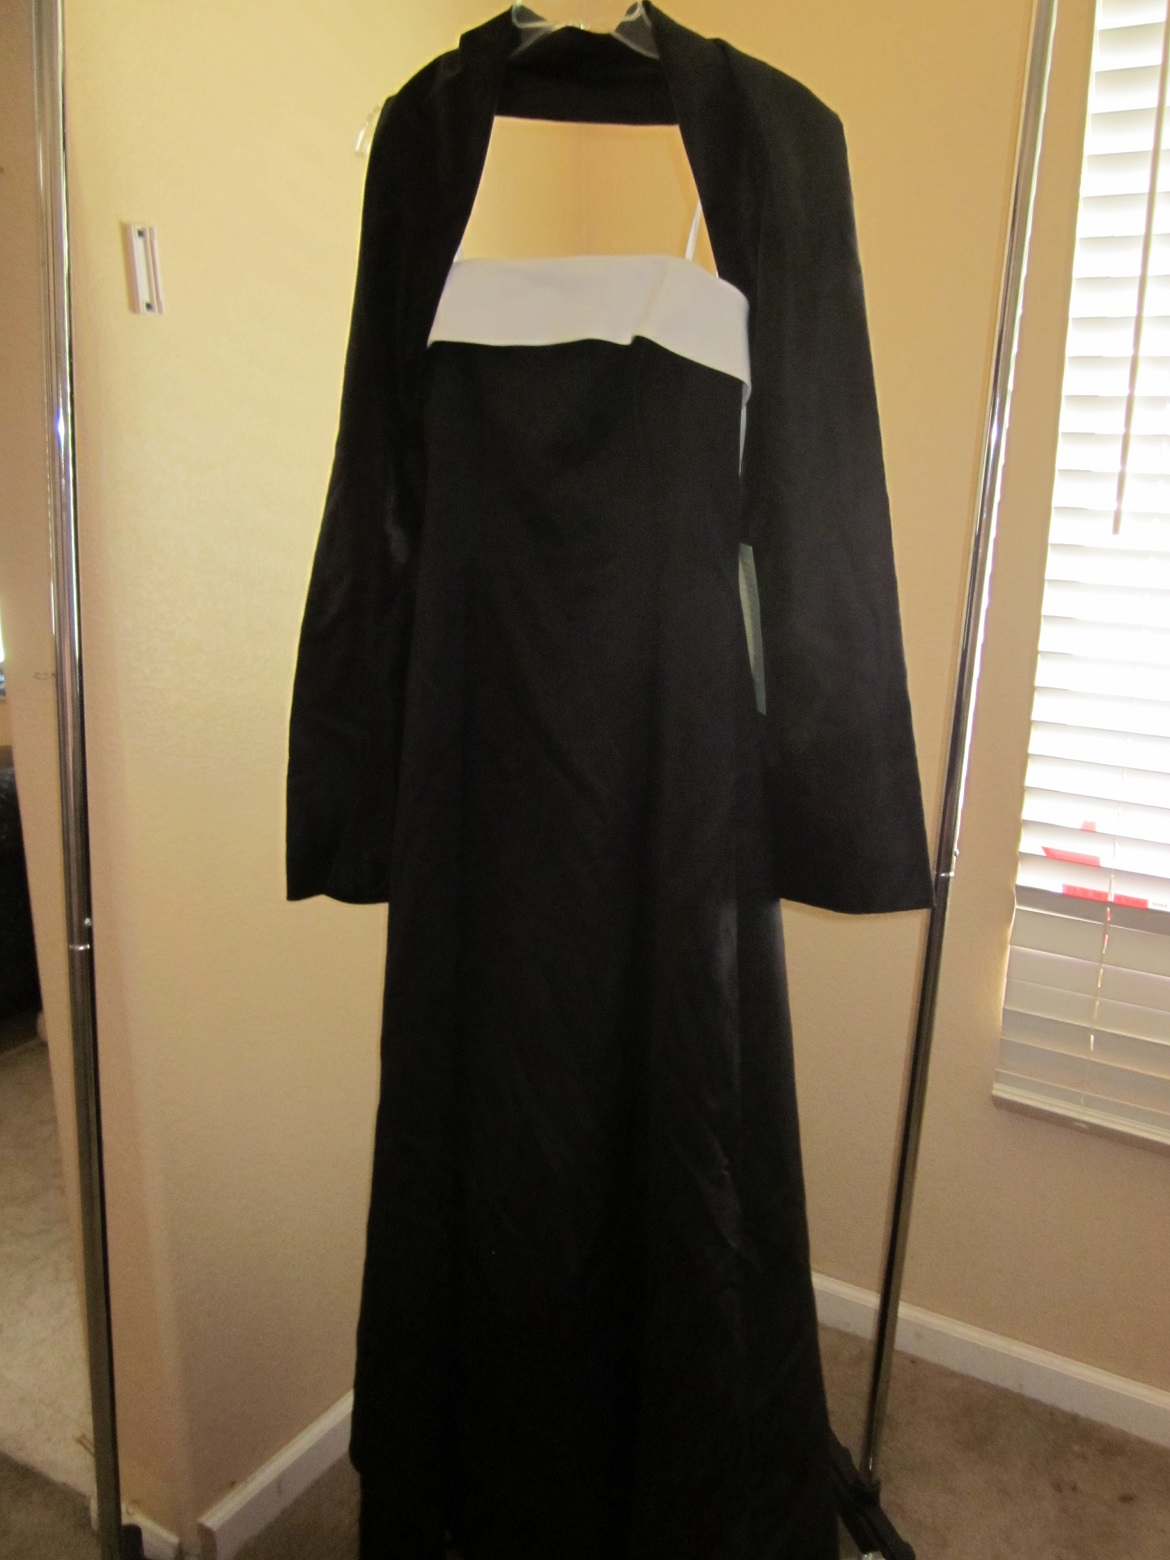 Formal Dress - Size 7/8